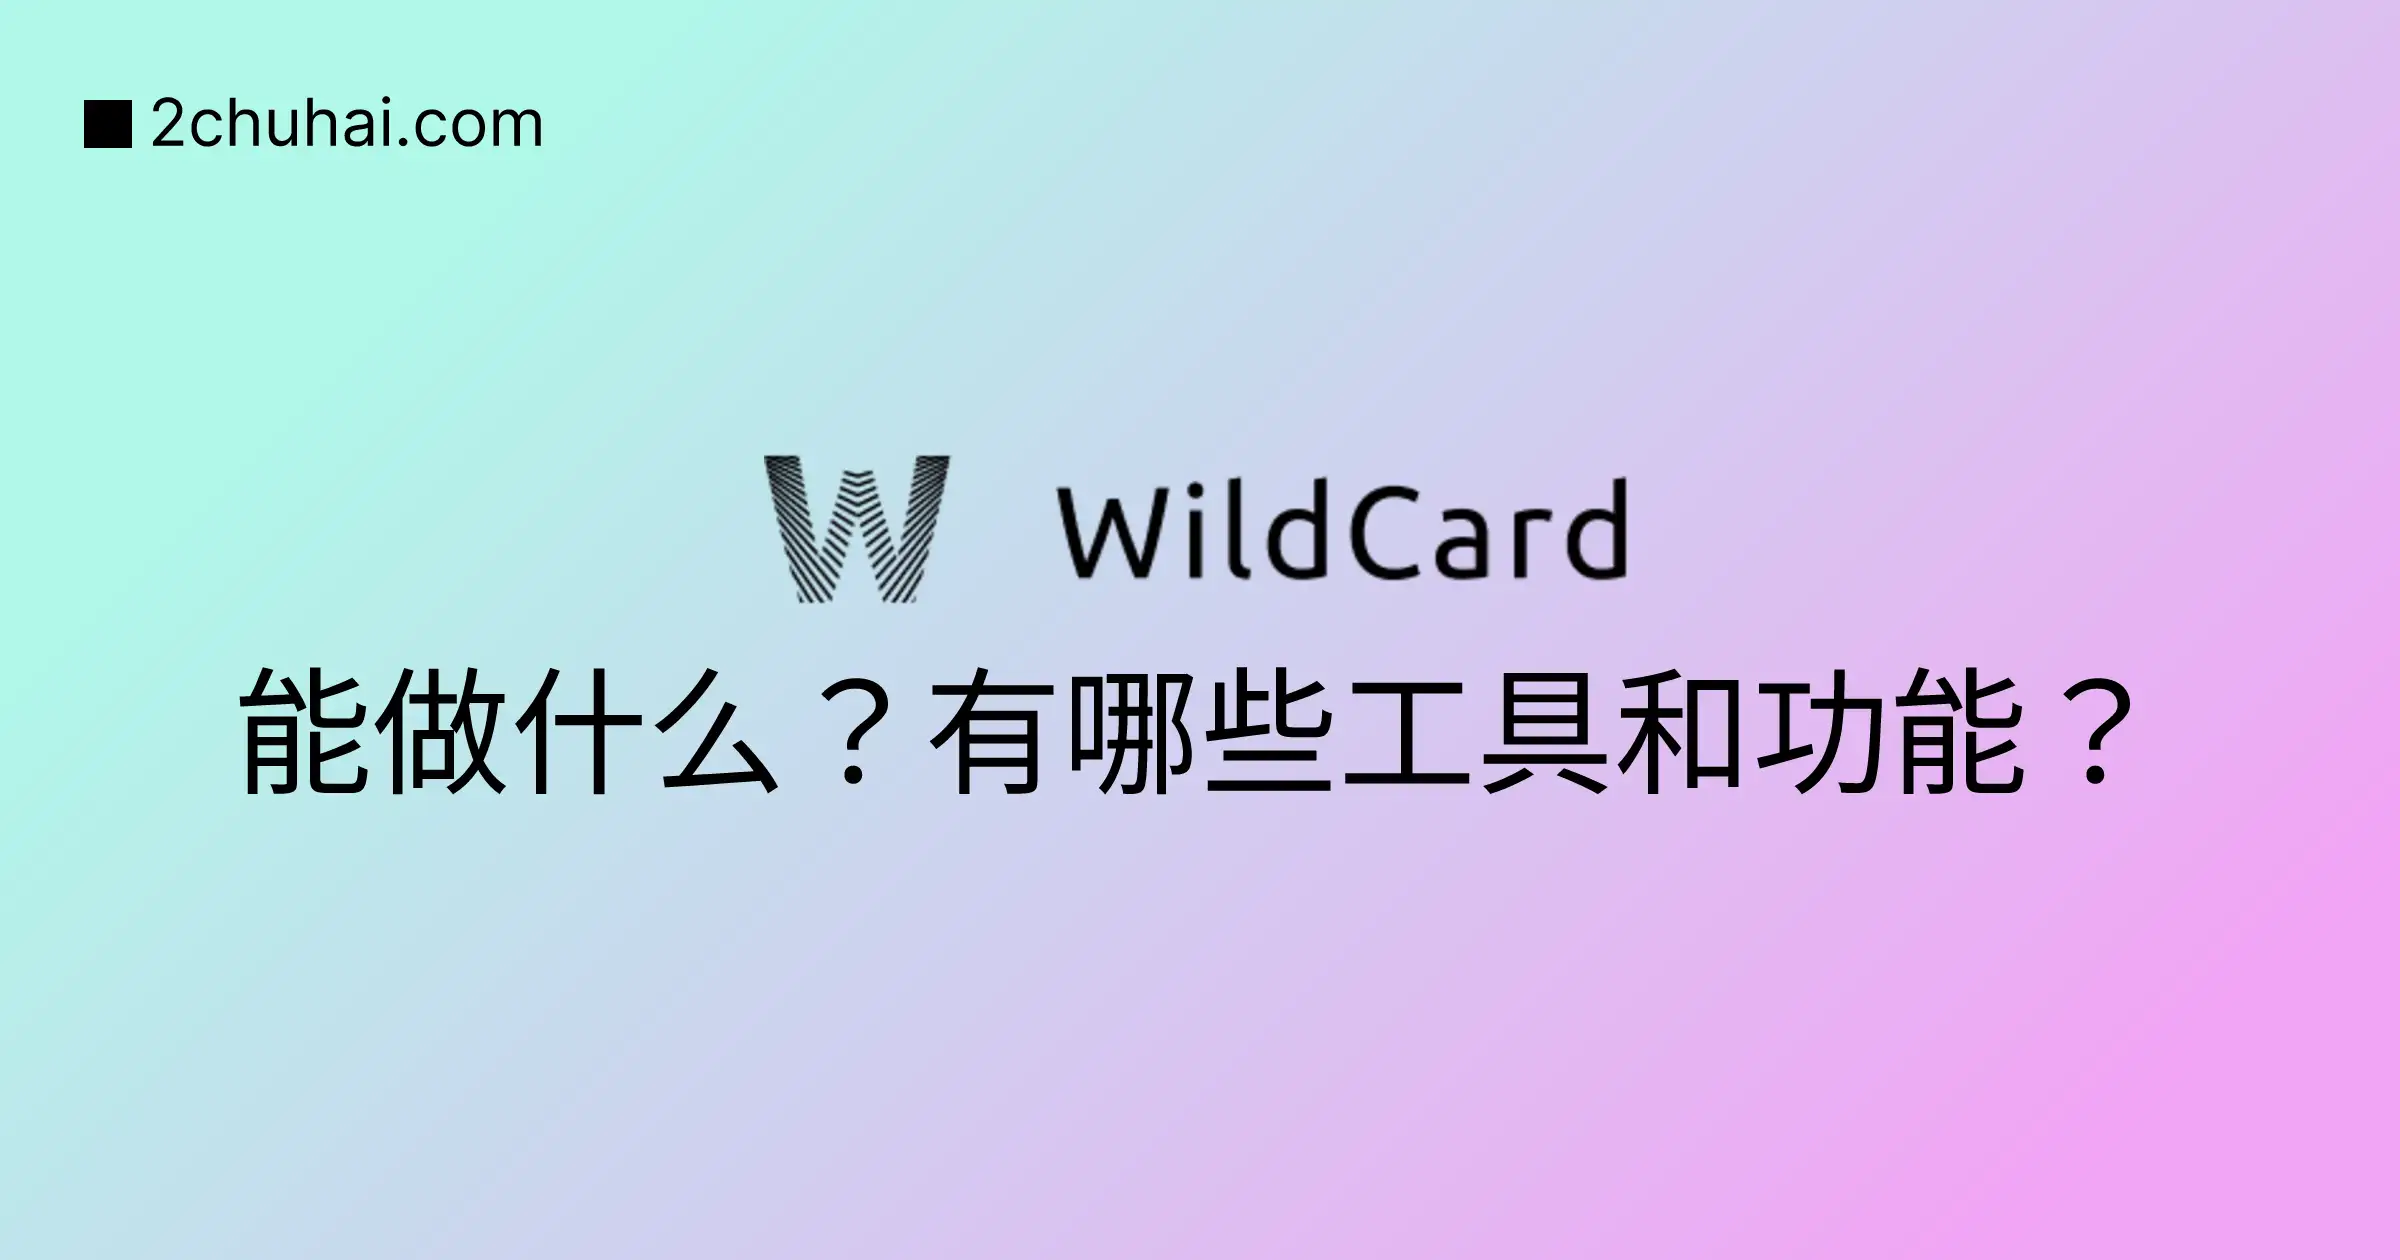 WildCard 能做什么？有哪些工具和功能？